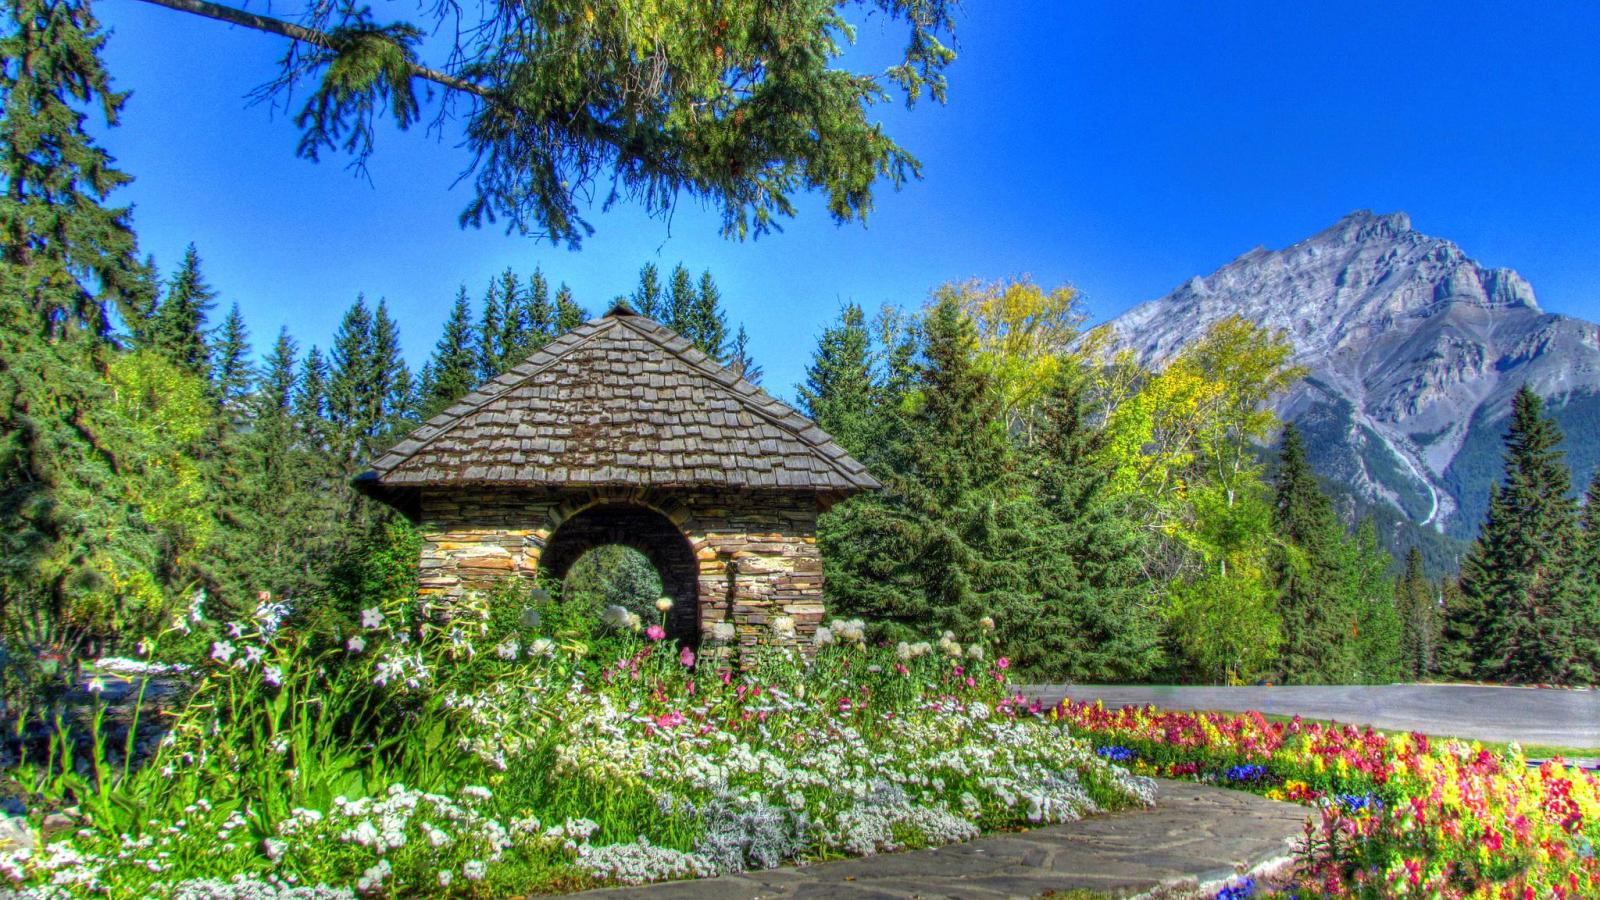 Gardens Banff National Park High Quality And Resolution